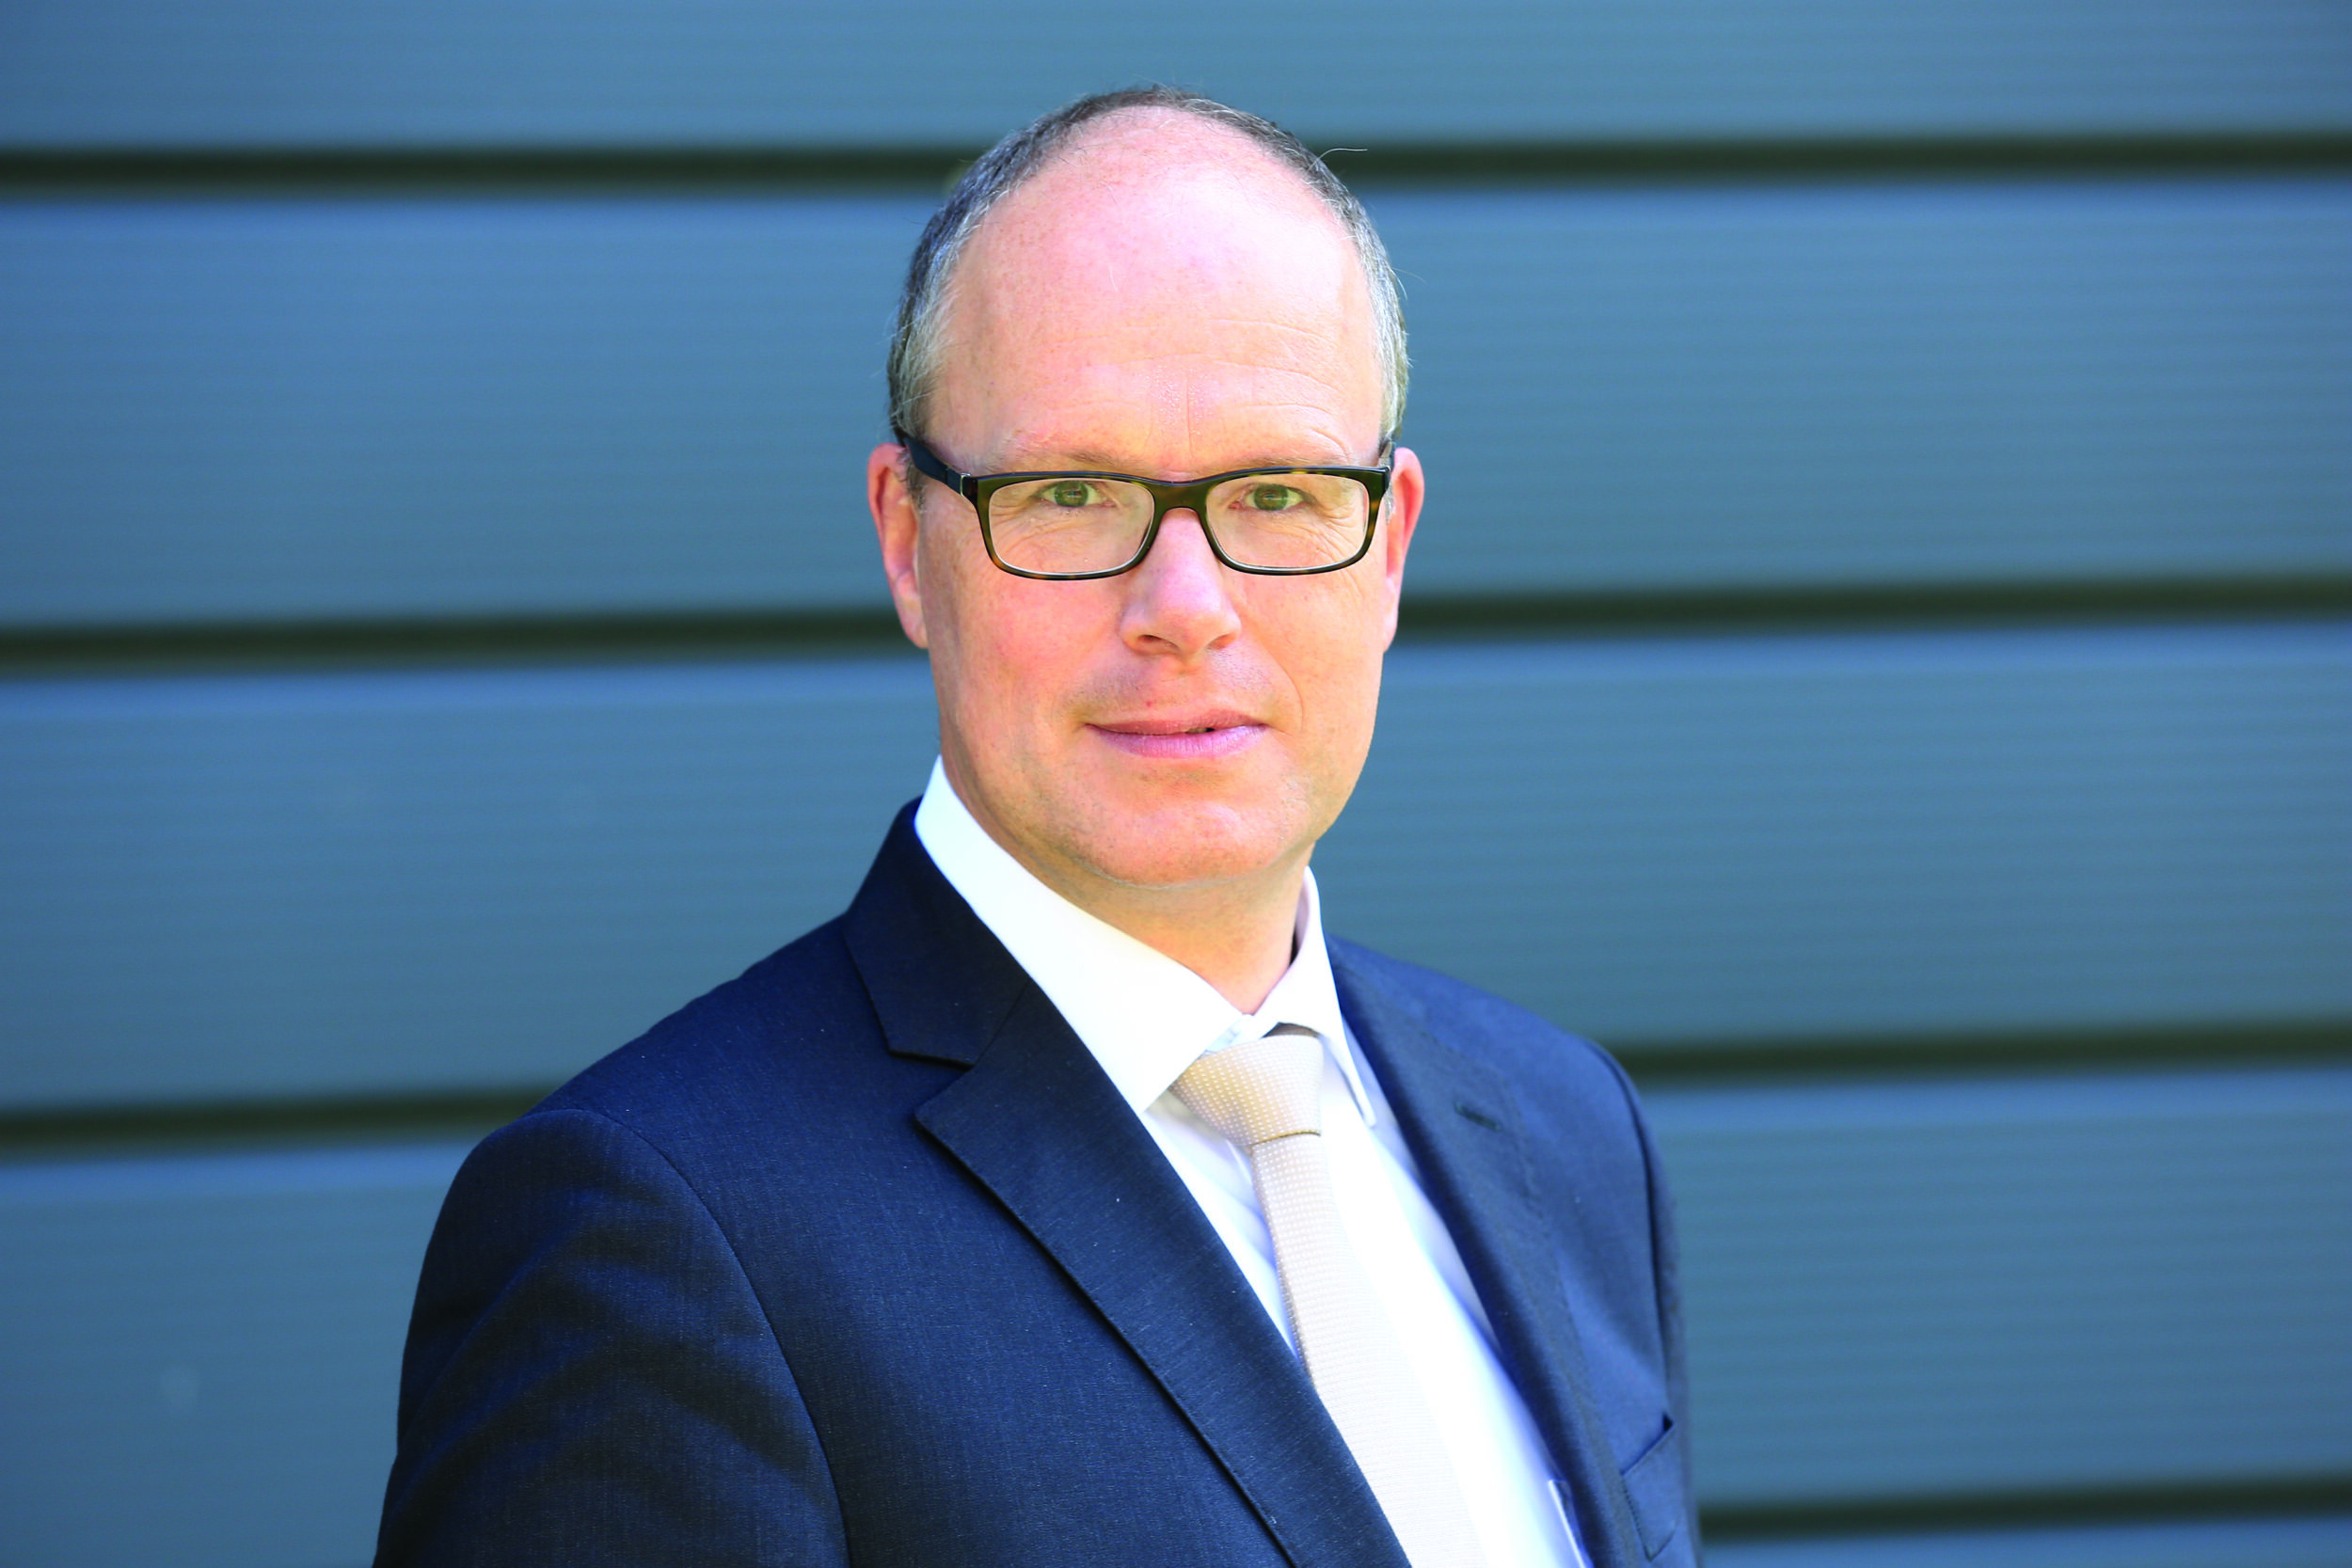 Portrait Dr. Jürgen Brandes, CEO der Siemens-Division Process Industries and Drives (Bild: Siemens AG)